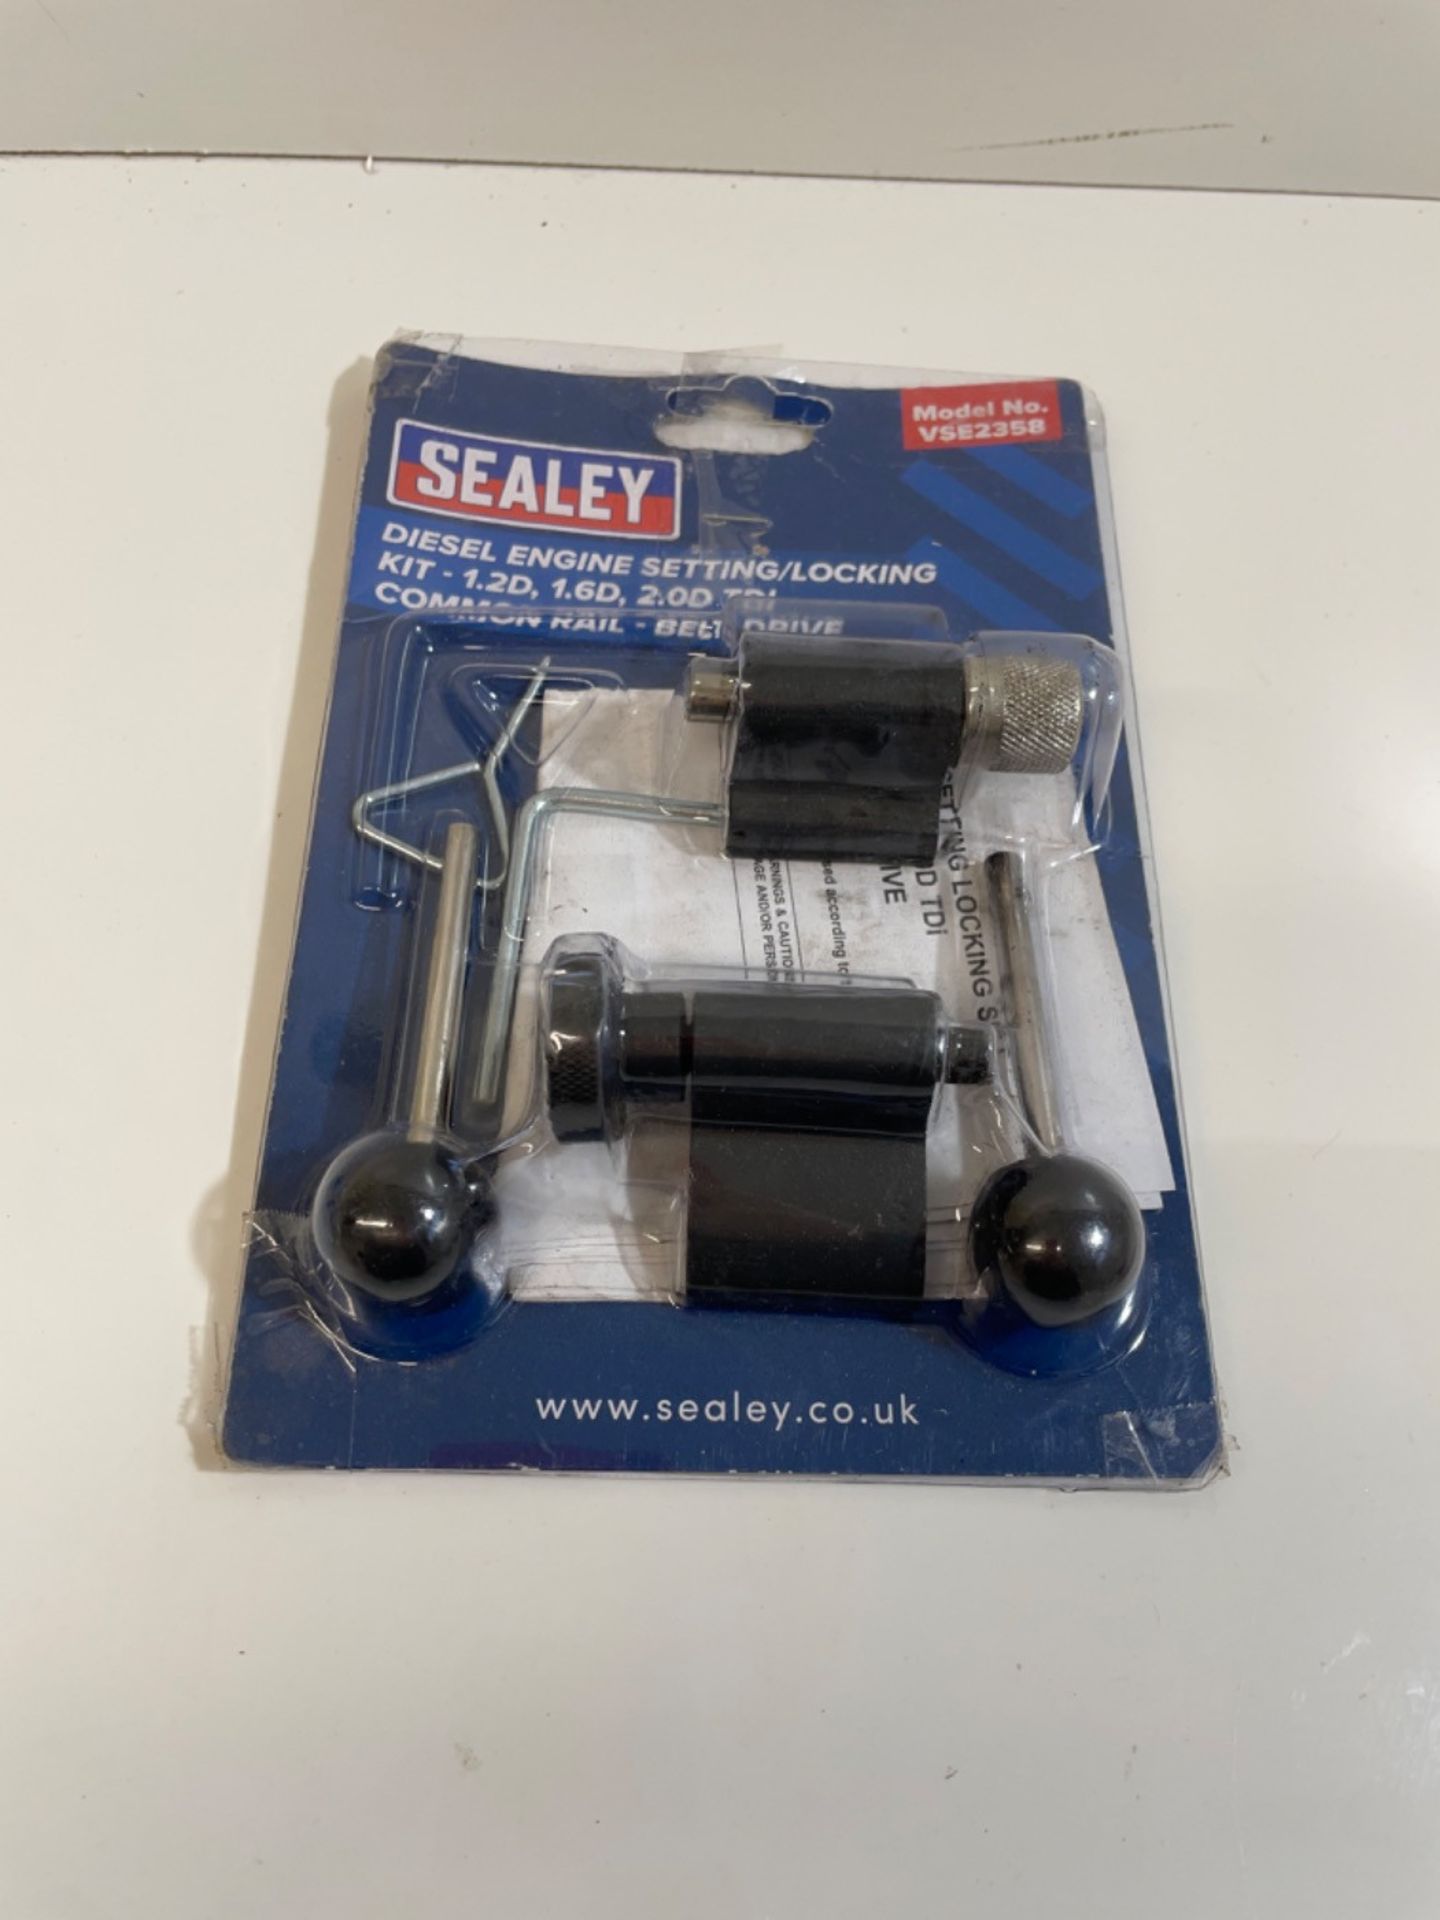 Sealey VSE2358 Diesel Engine Setting/Locking Kit Belt Drive - Image 2 of 2